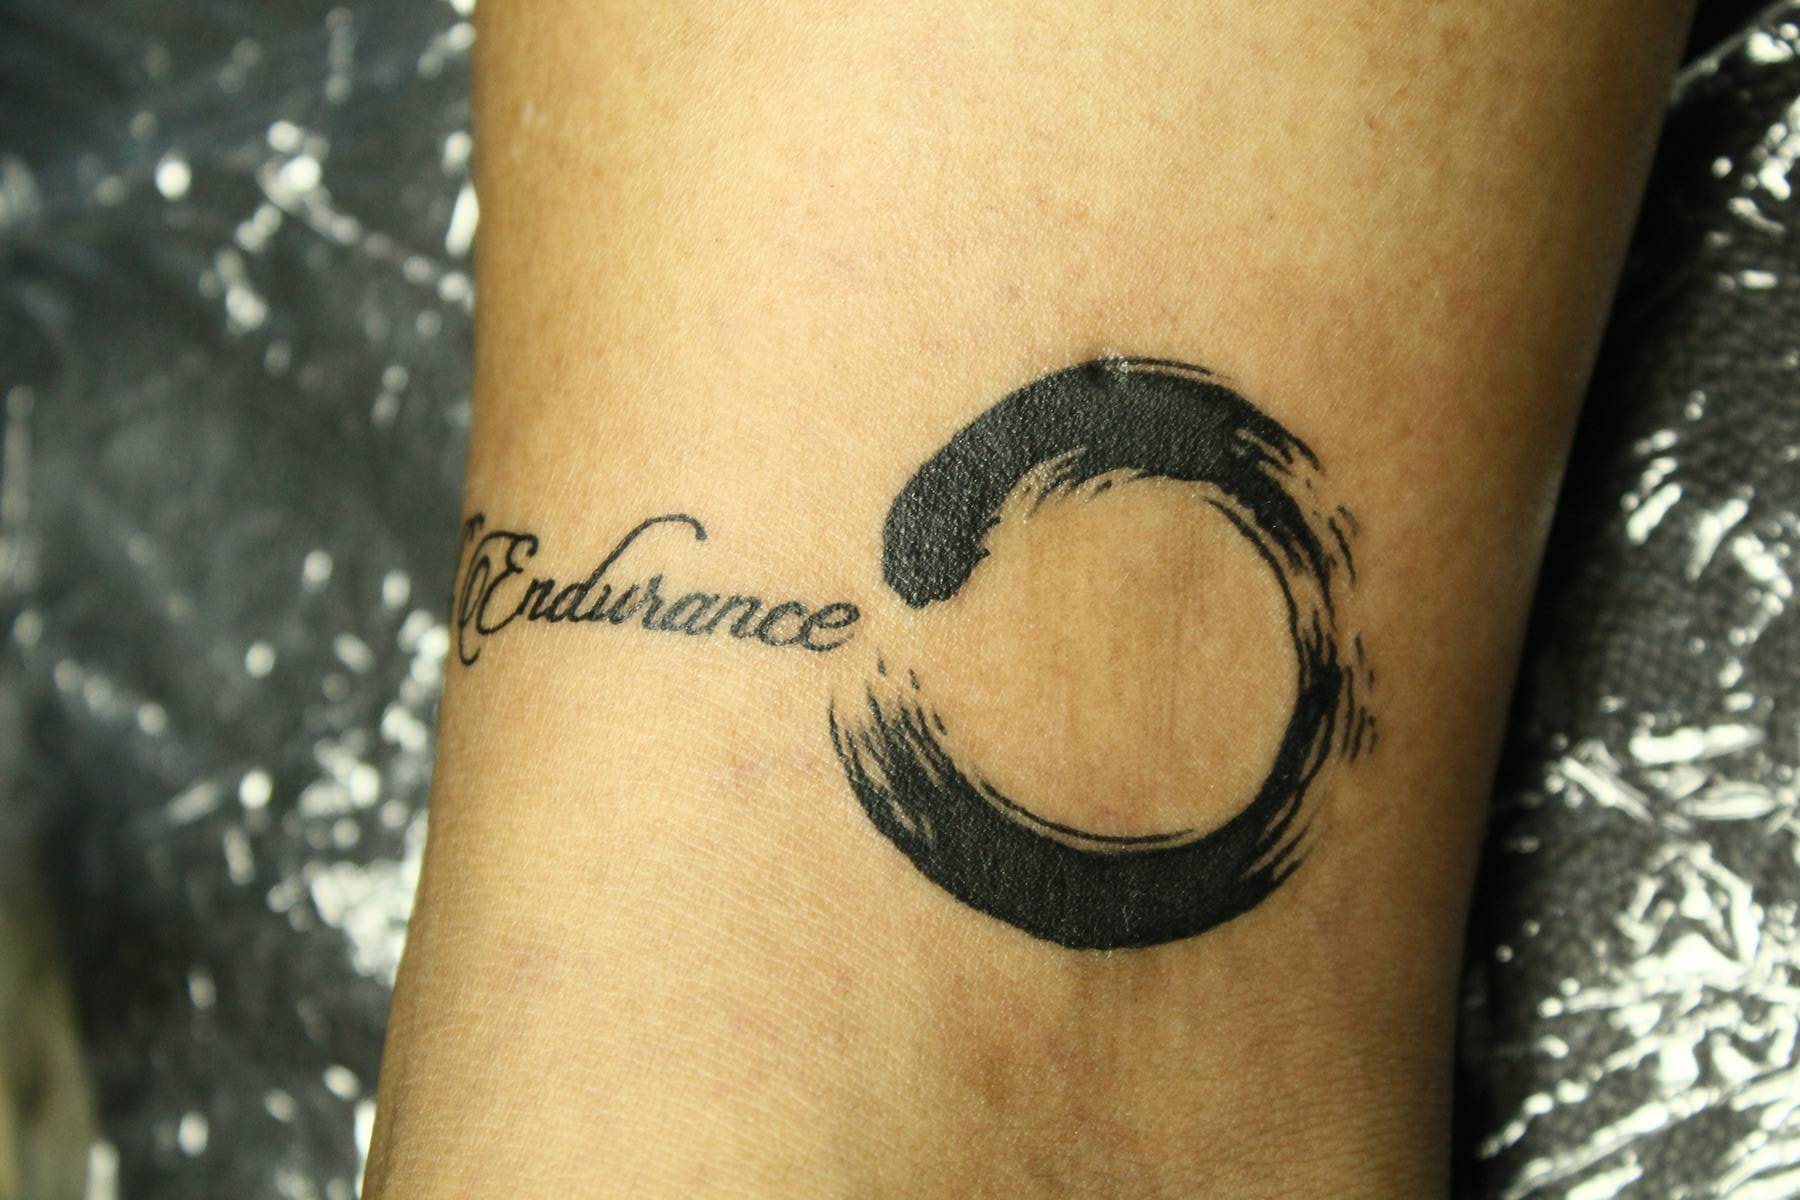 Endurance - Black Zen Enso Circle Tattoo Design For Leg